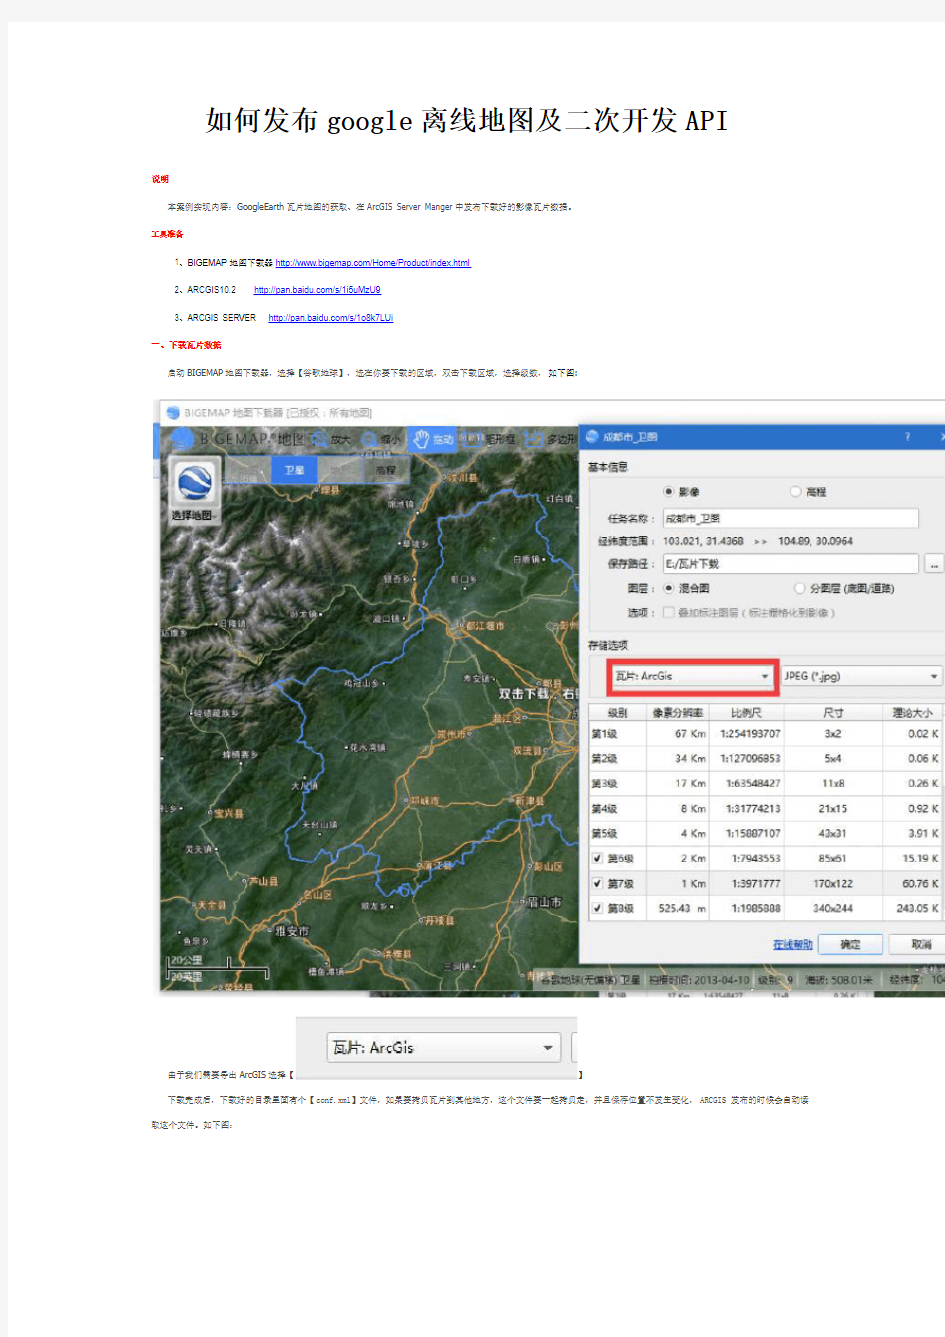 bigemap发布google离线地图及二次开发API